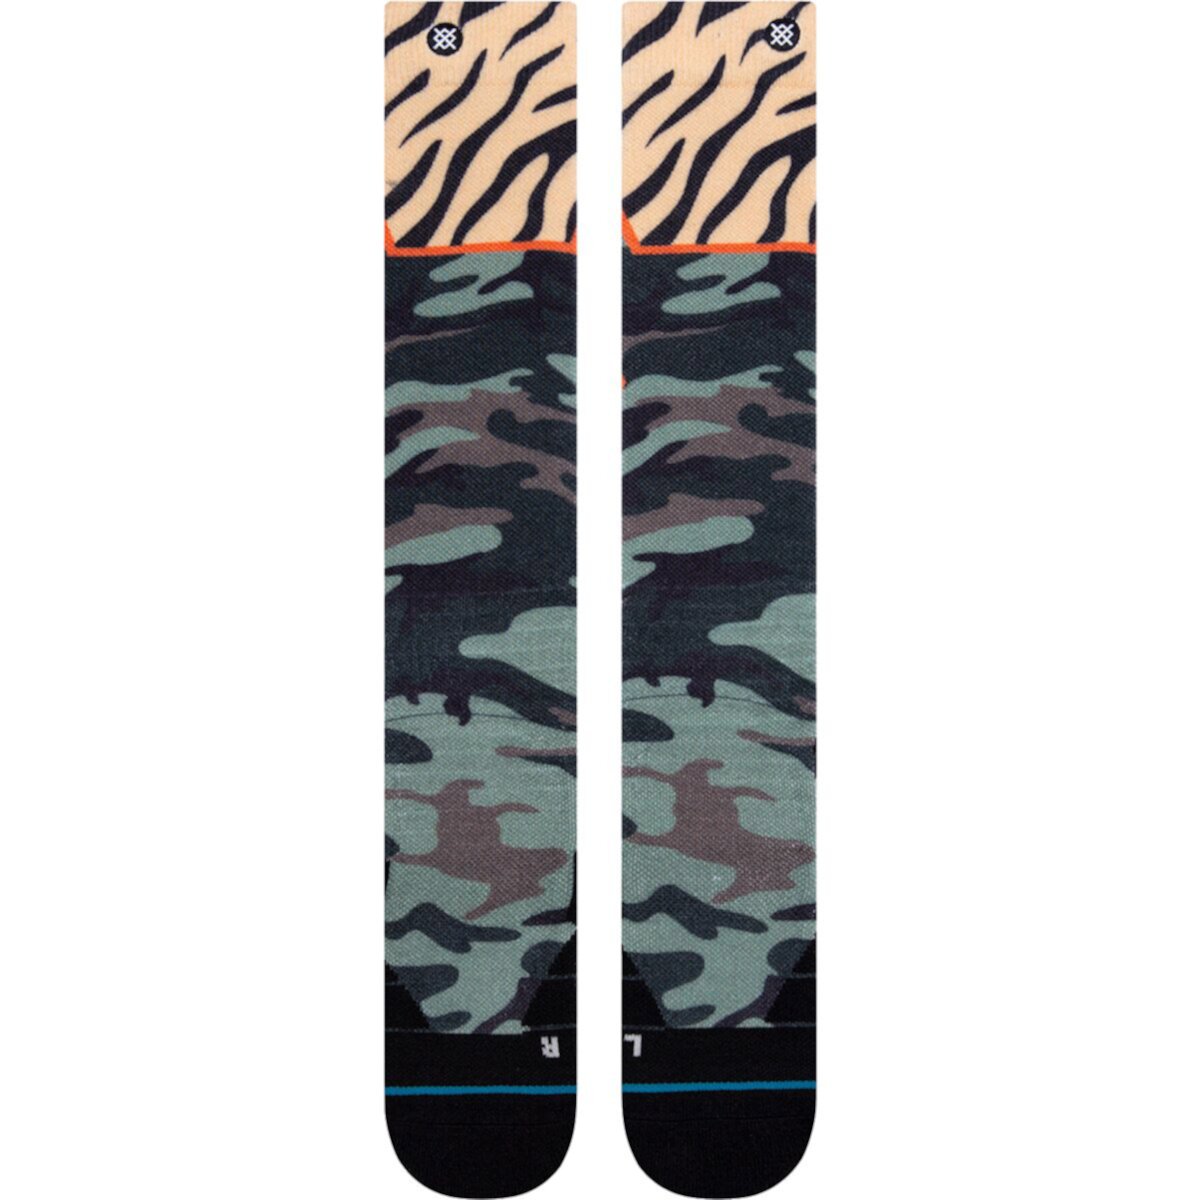 Получить Wild Ski Sock Stance